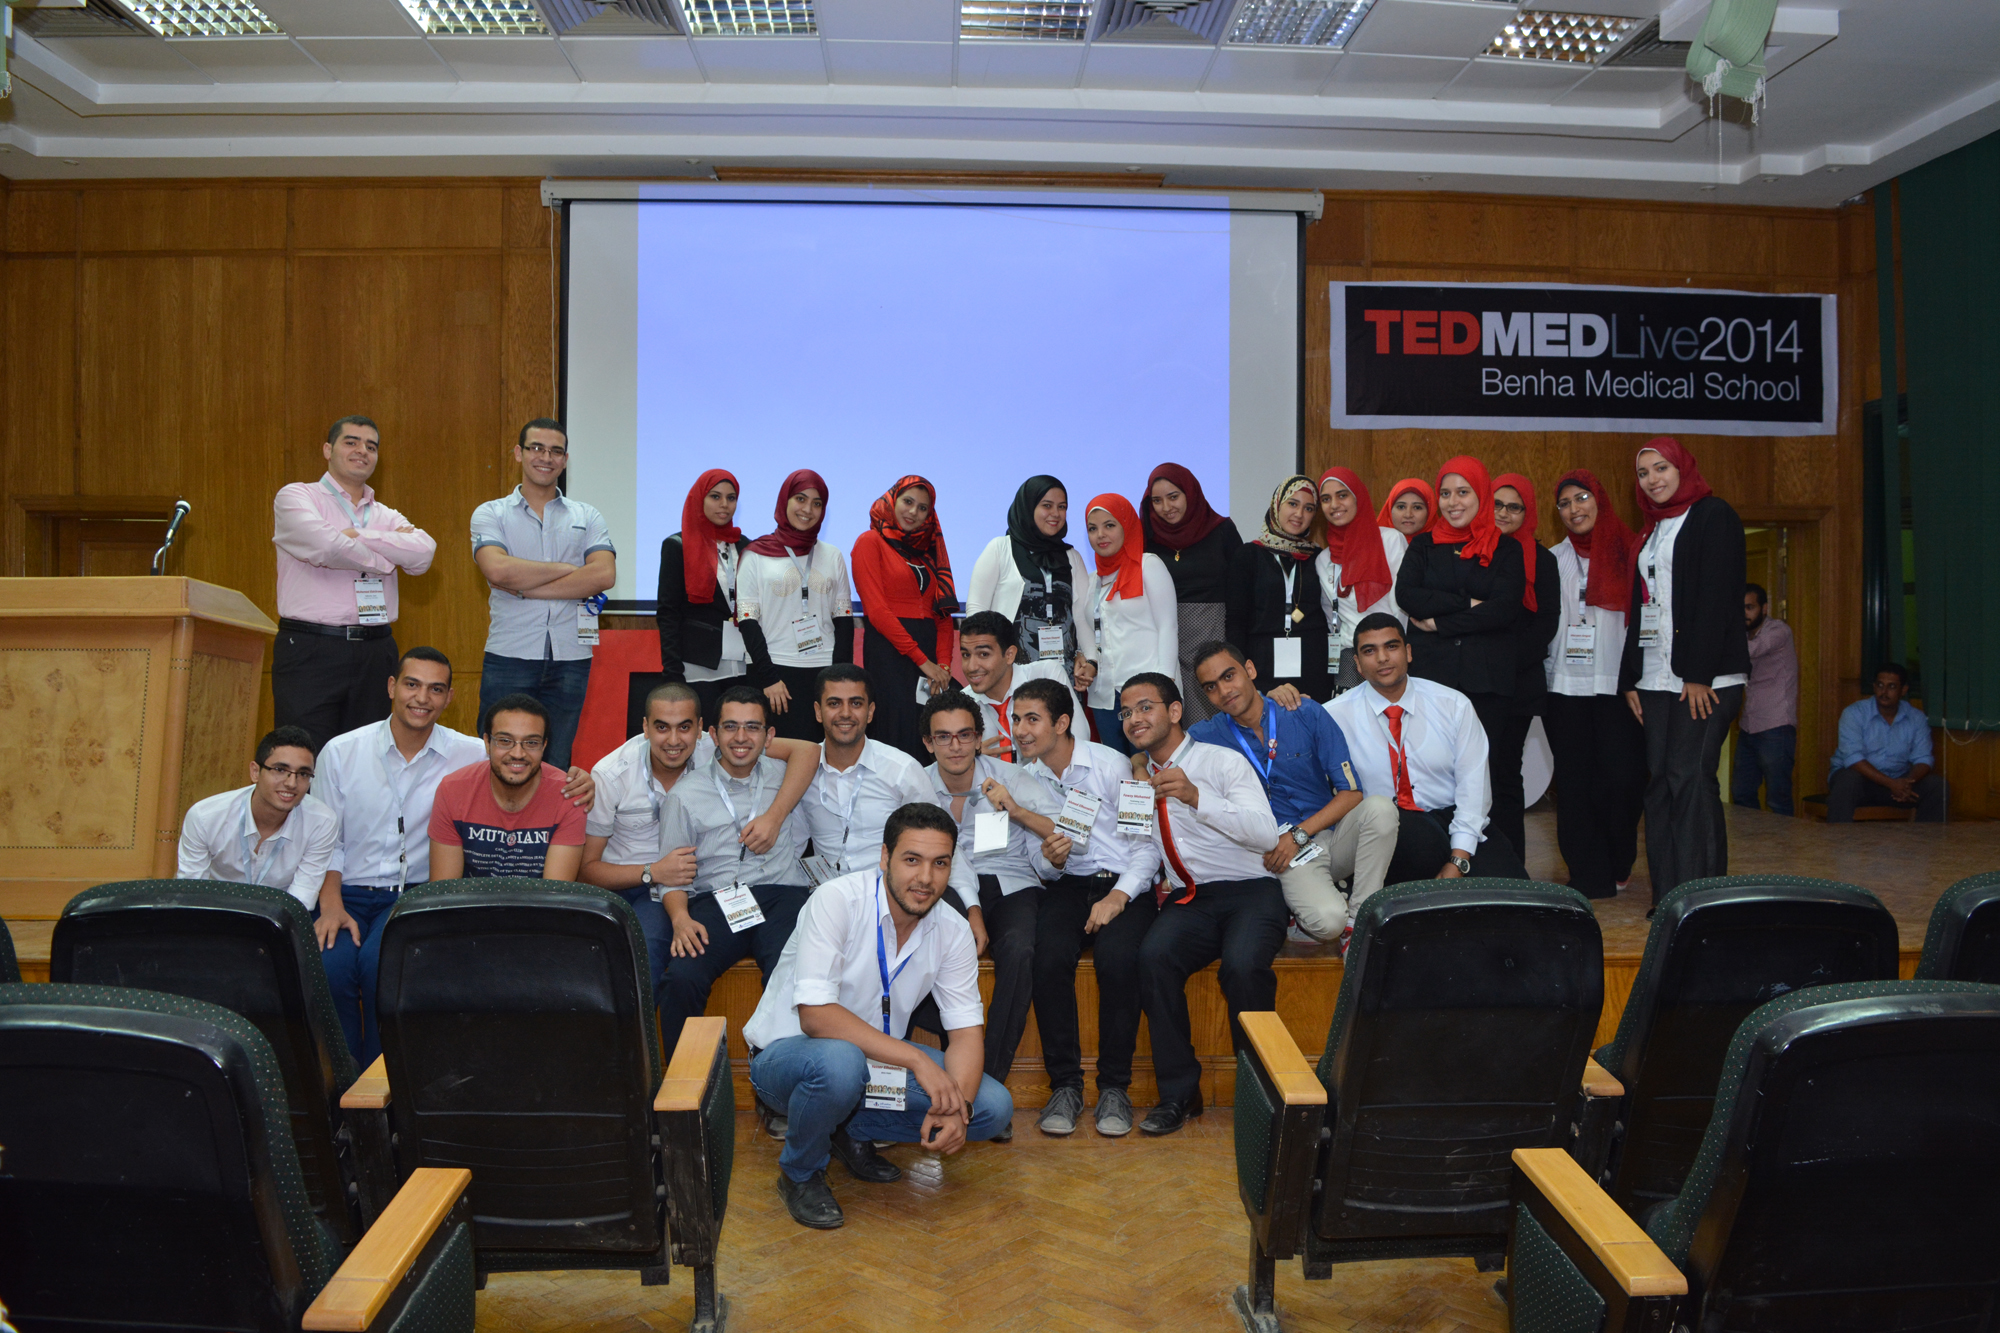 Benha University hosts the Global Event “TEDMED” 